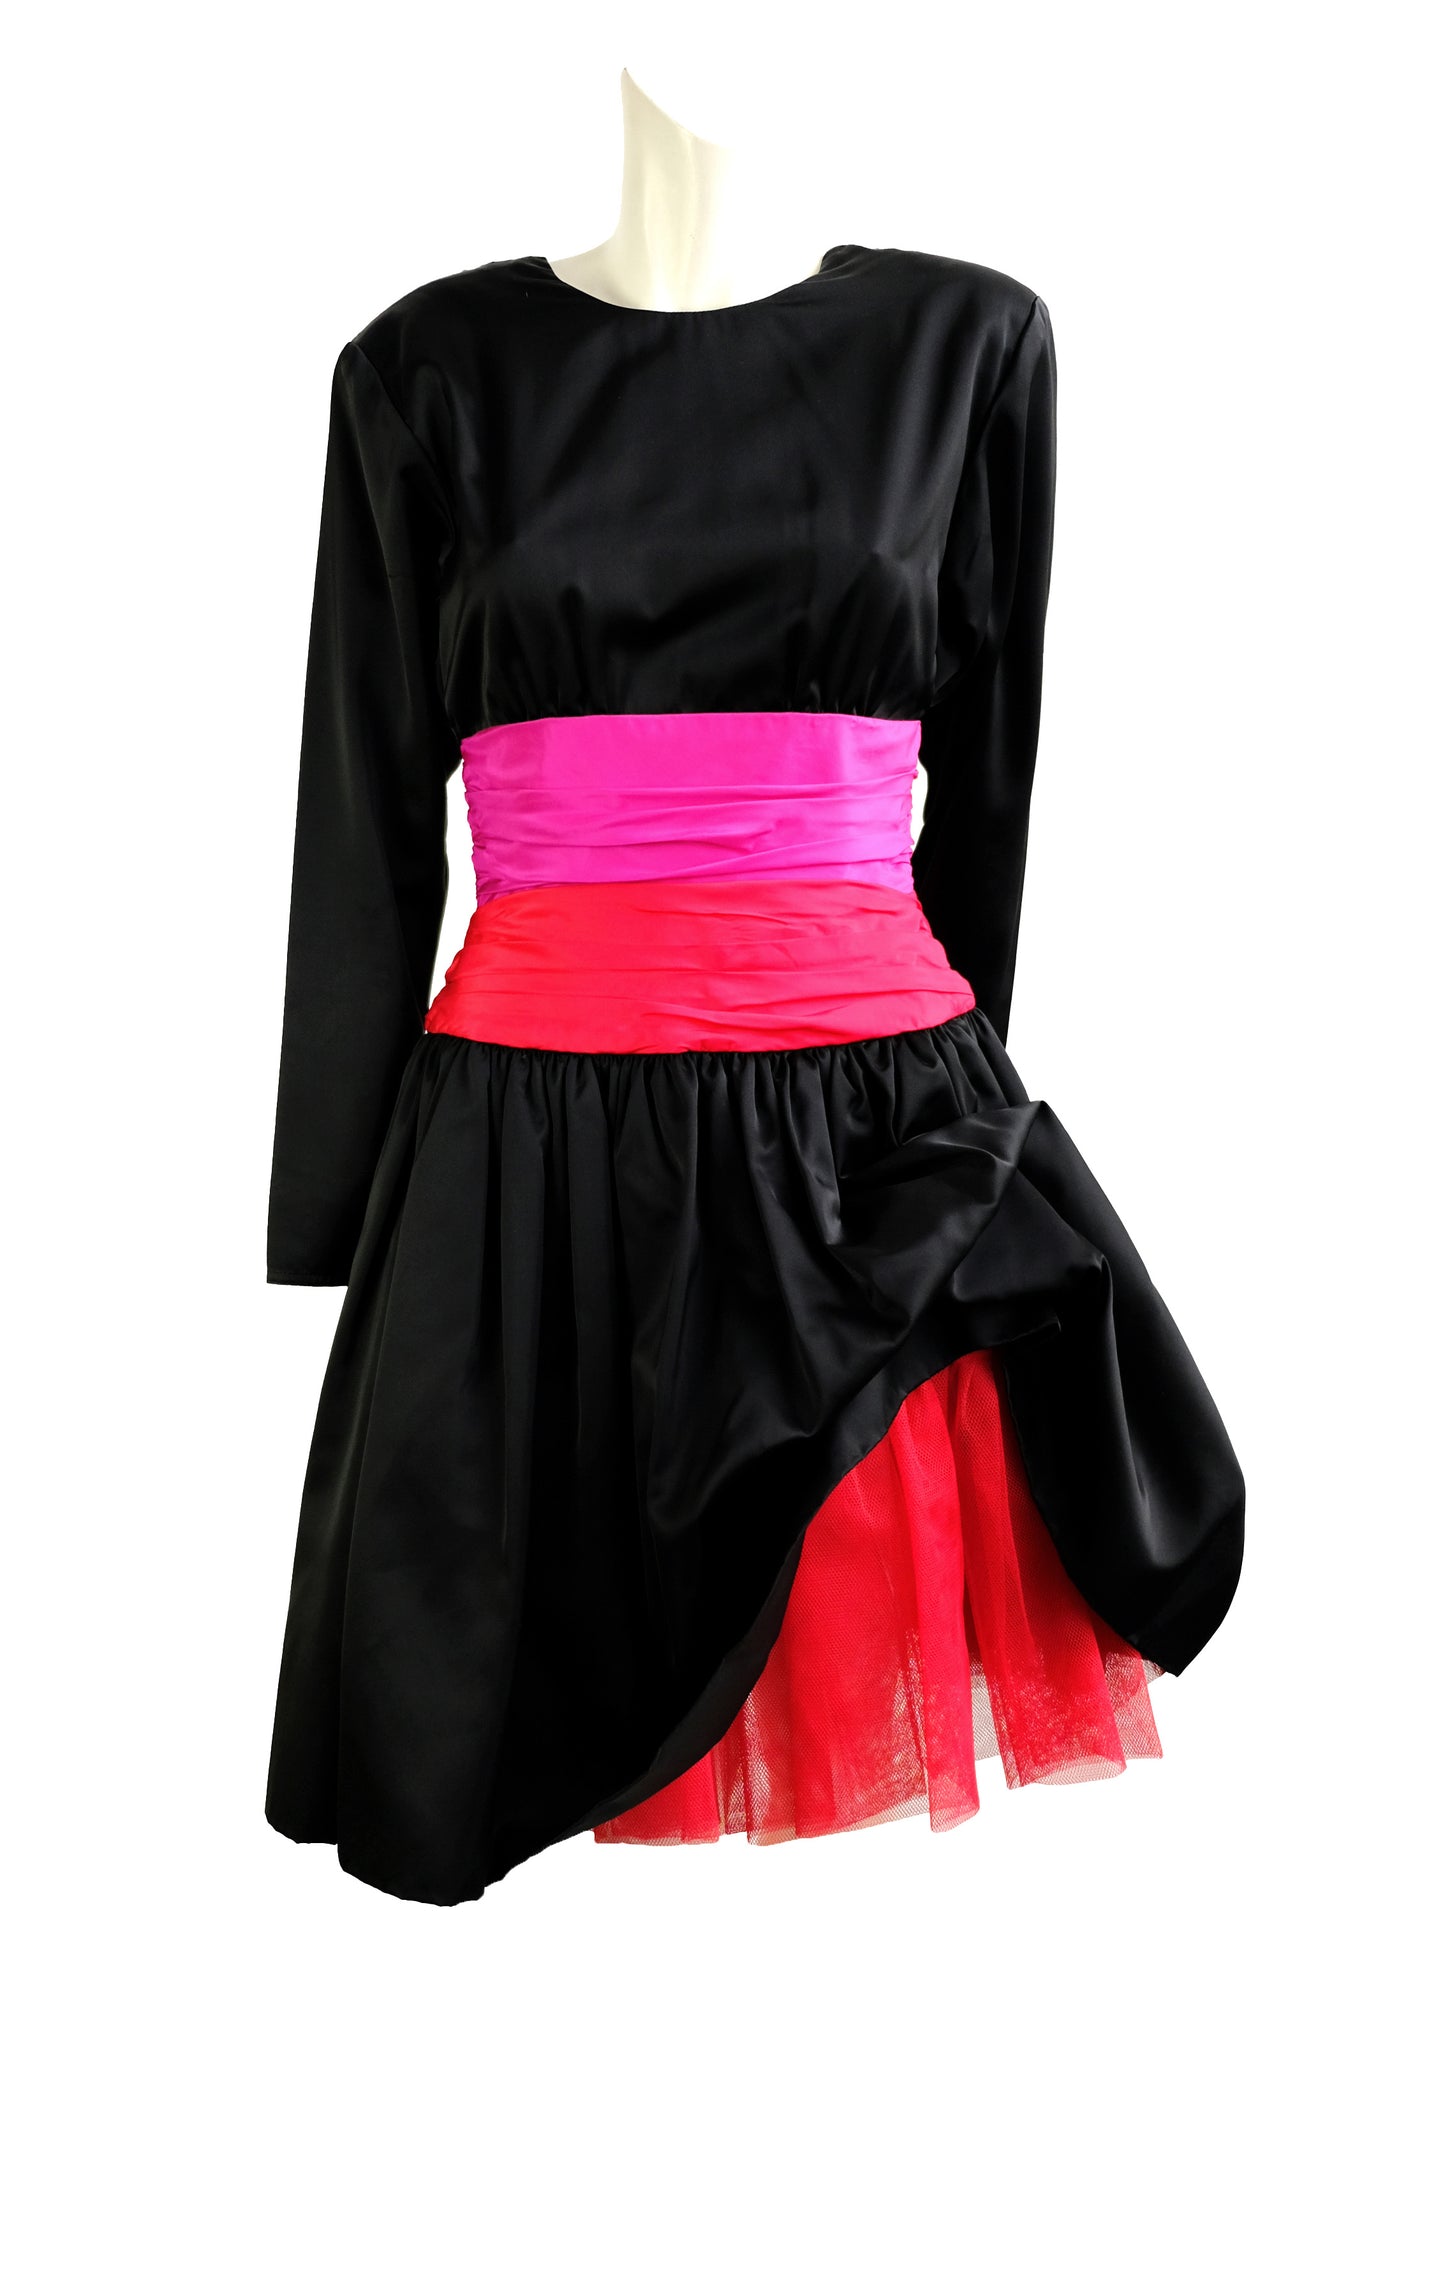 Roland Klein 1980s Party Dress in Black Satin with Pink & Red  Sash, Matching Handbag, UK10